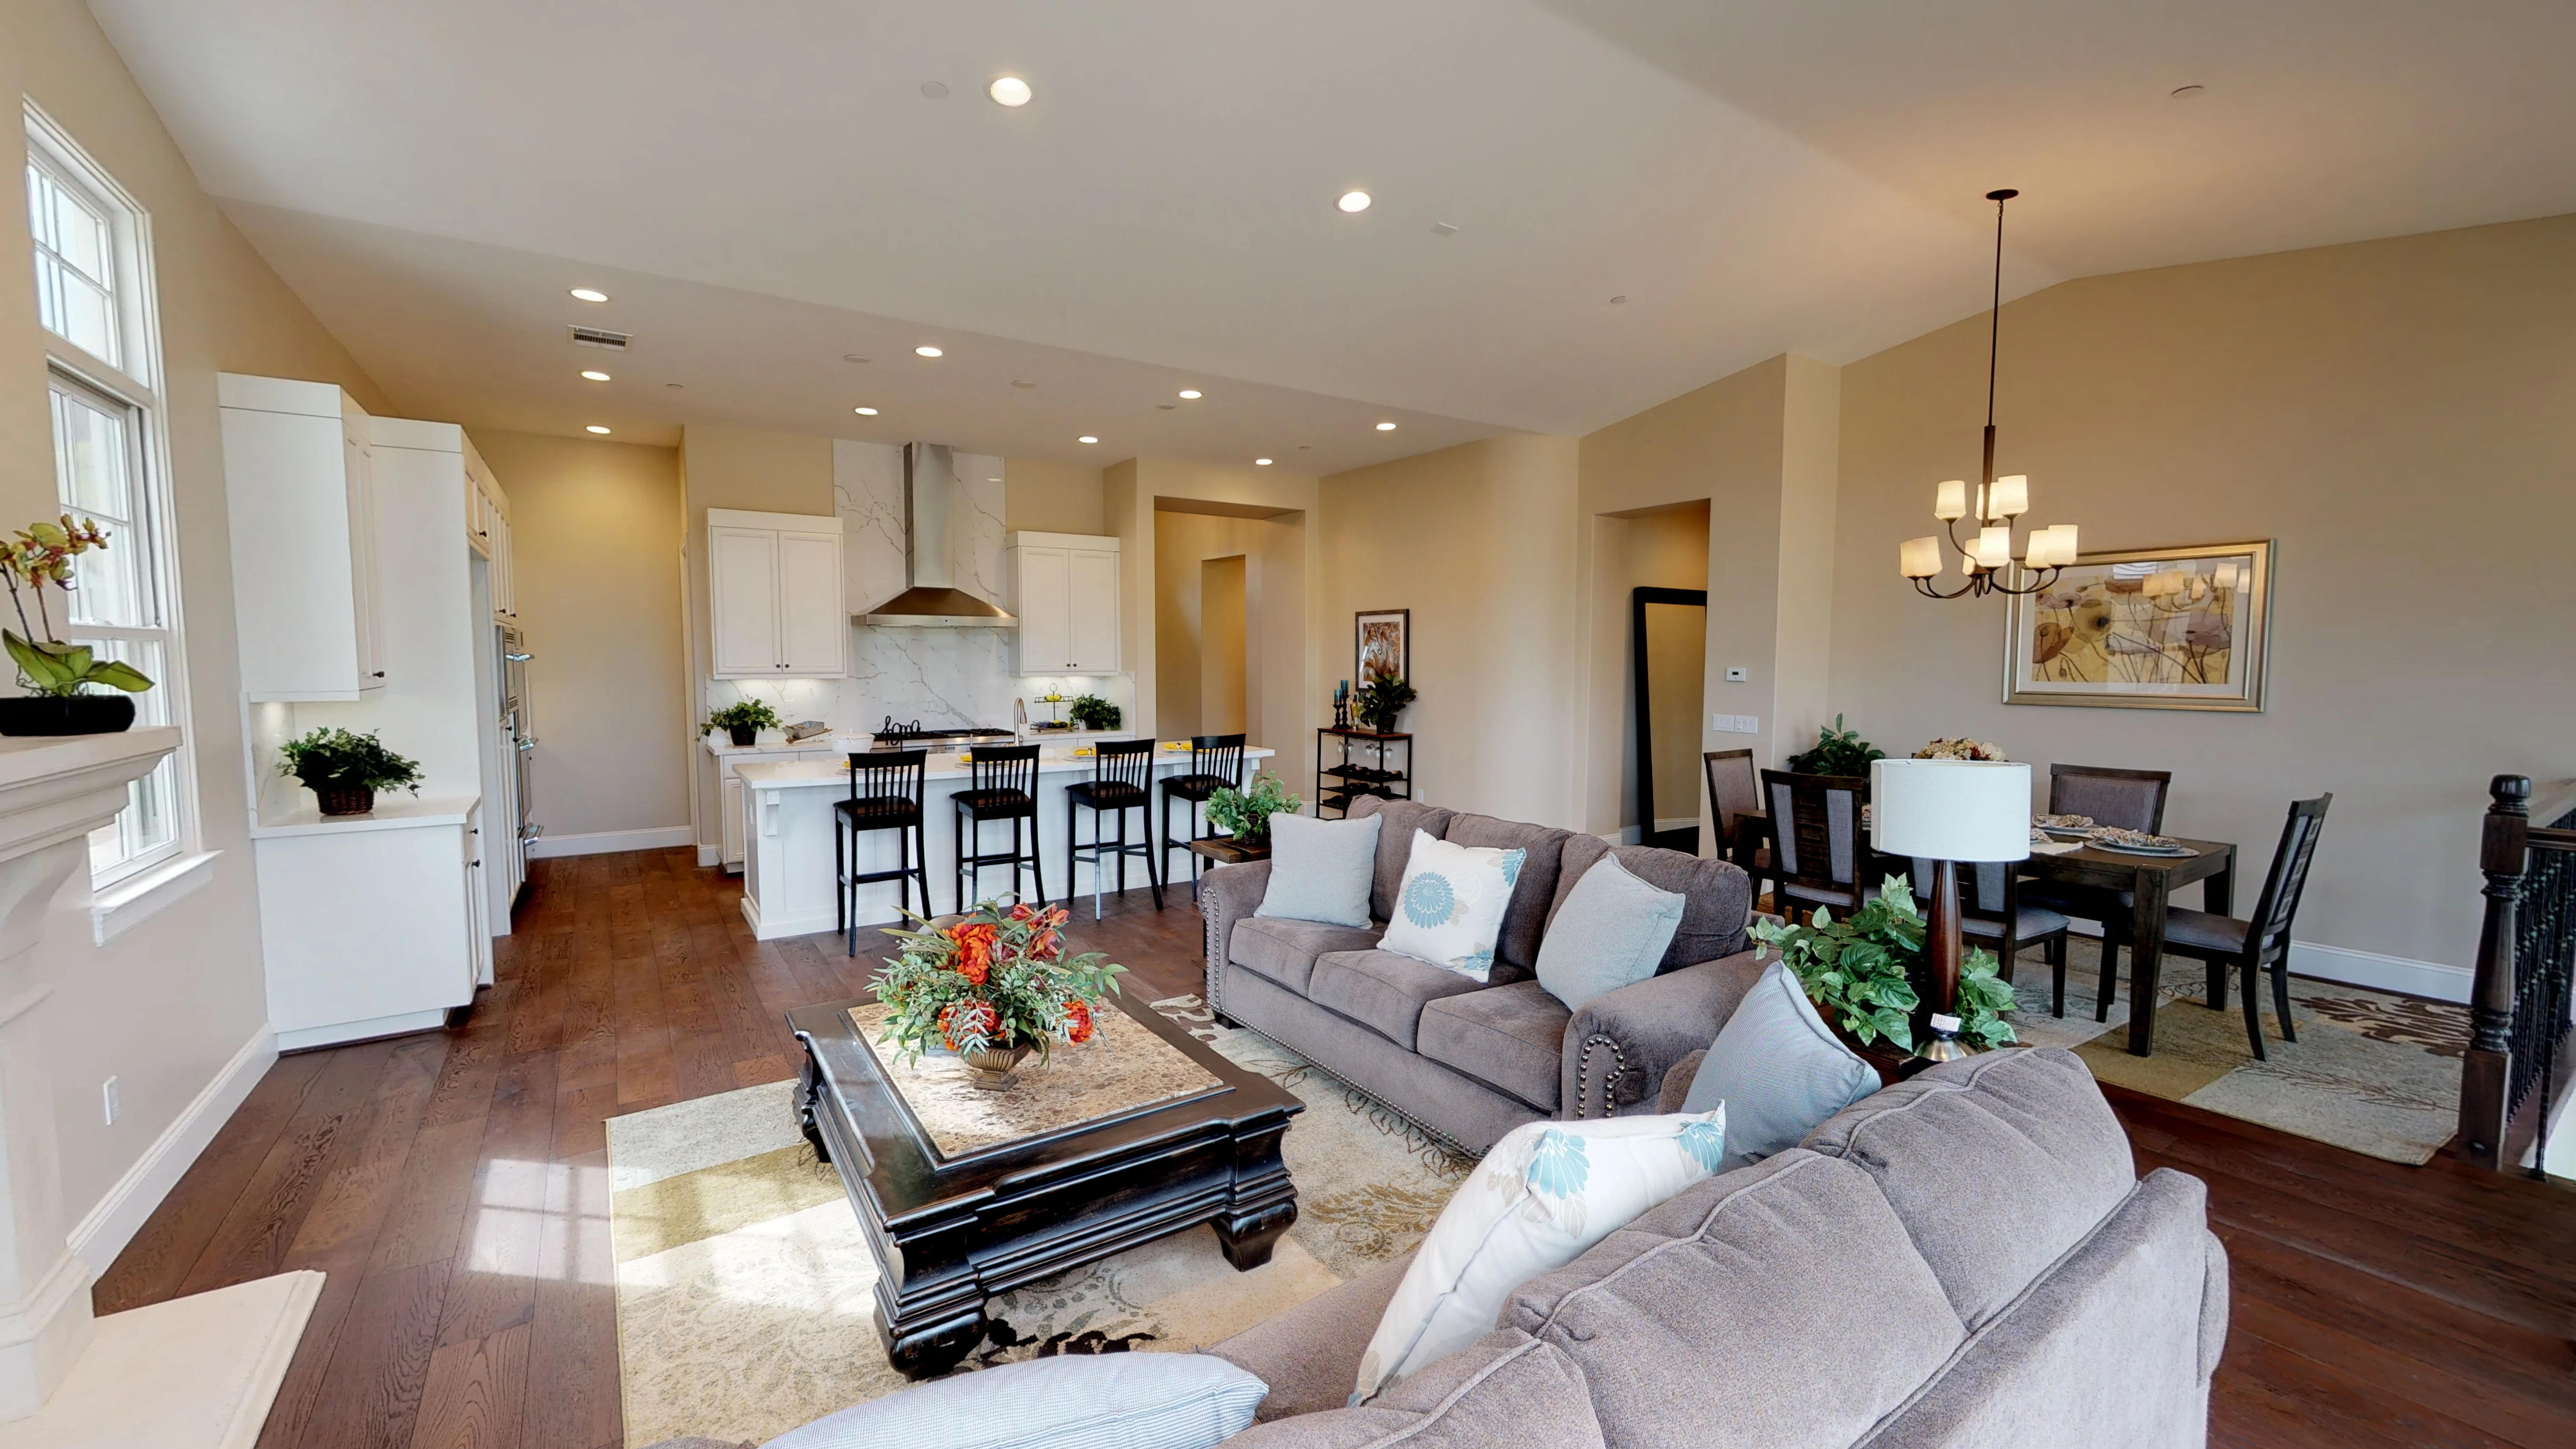 Living room interior | Elite Builder Services